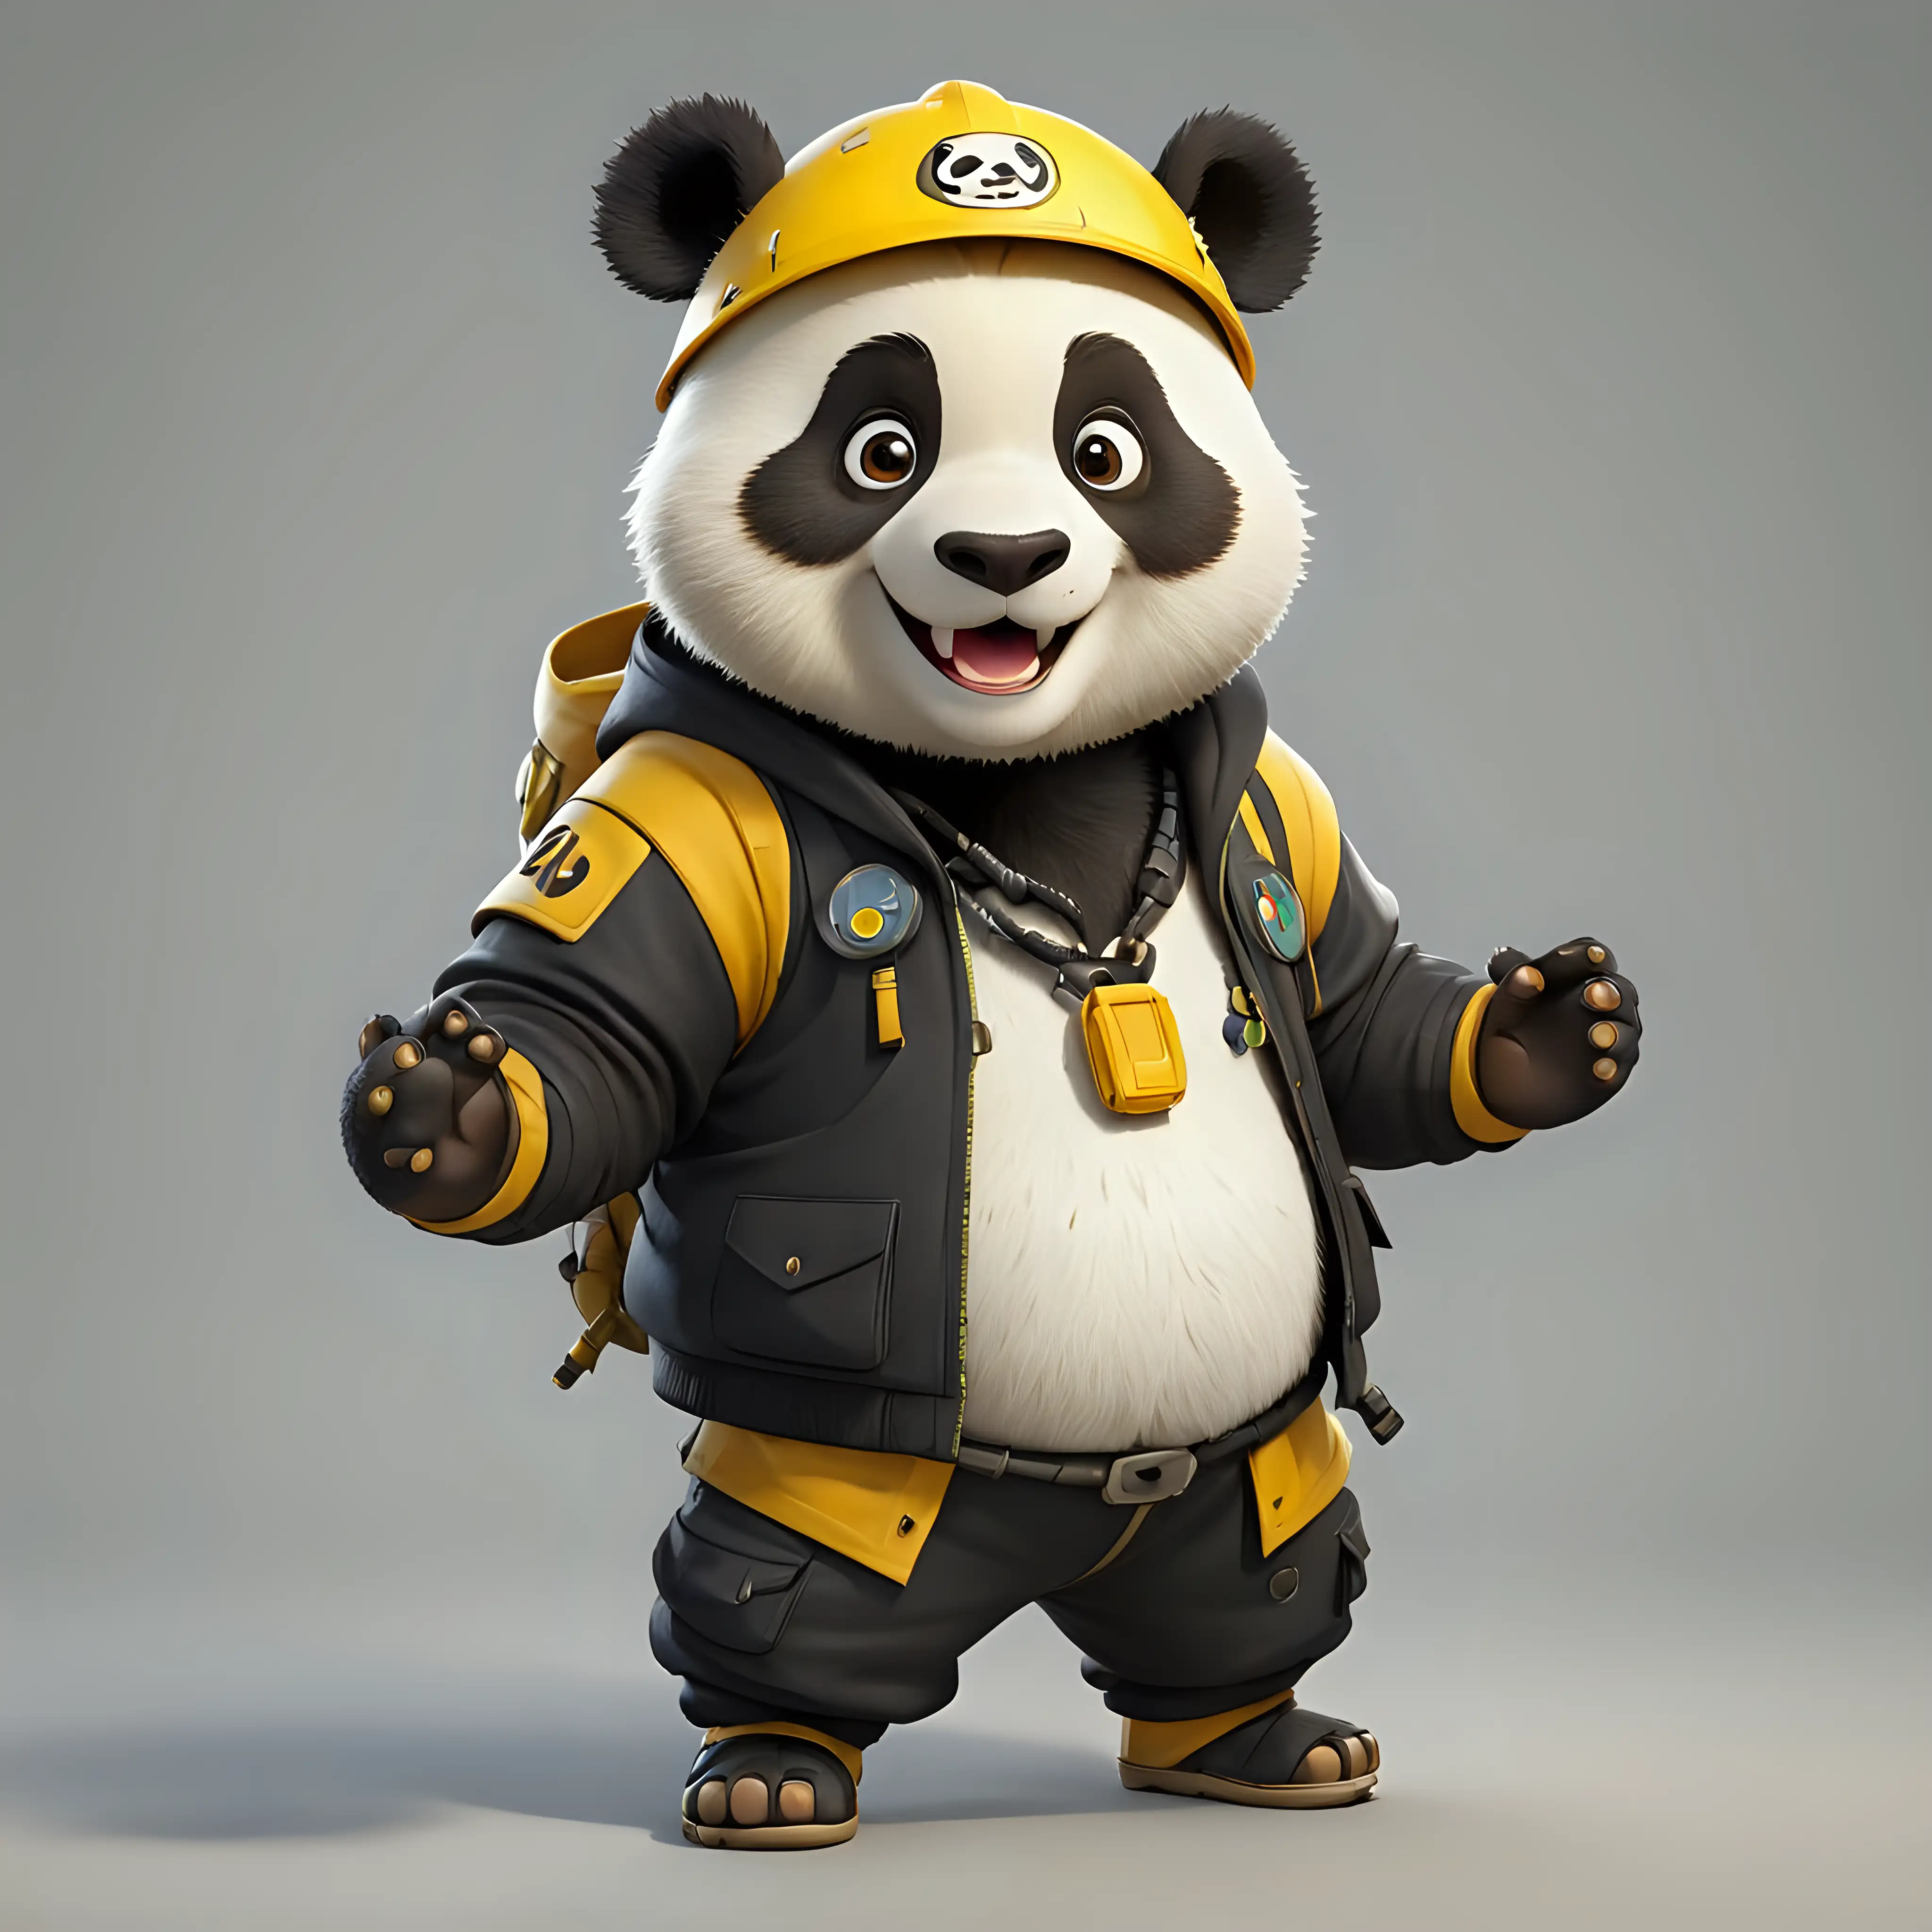 Cheerful Cartoon Panda Worker in Yellow Helmet and Overalls